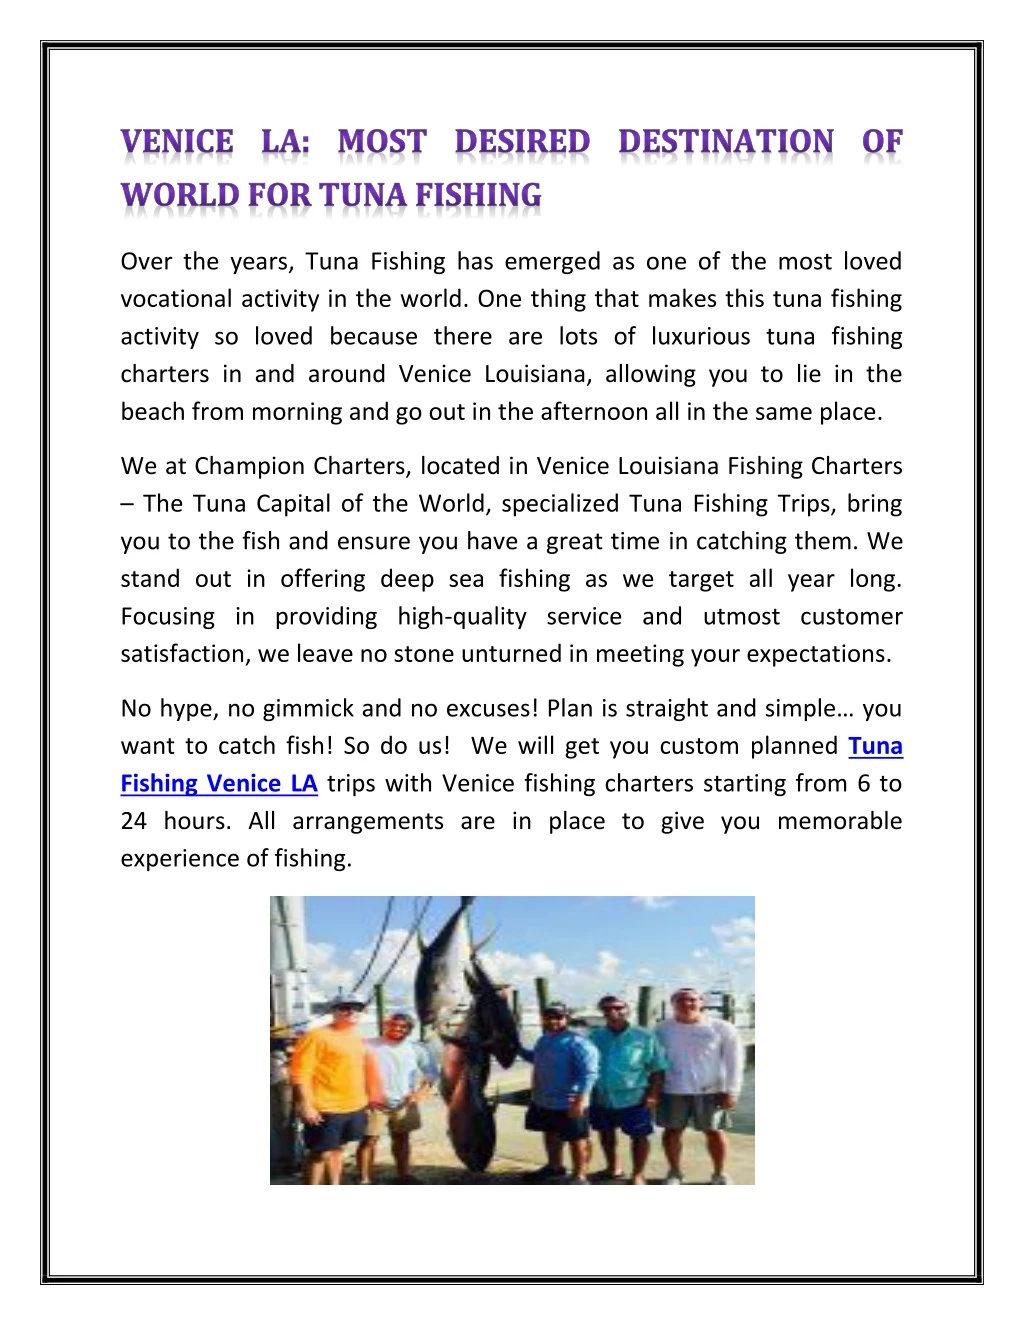 over the years tuna fishing has emerged